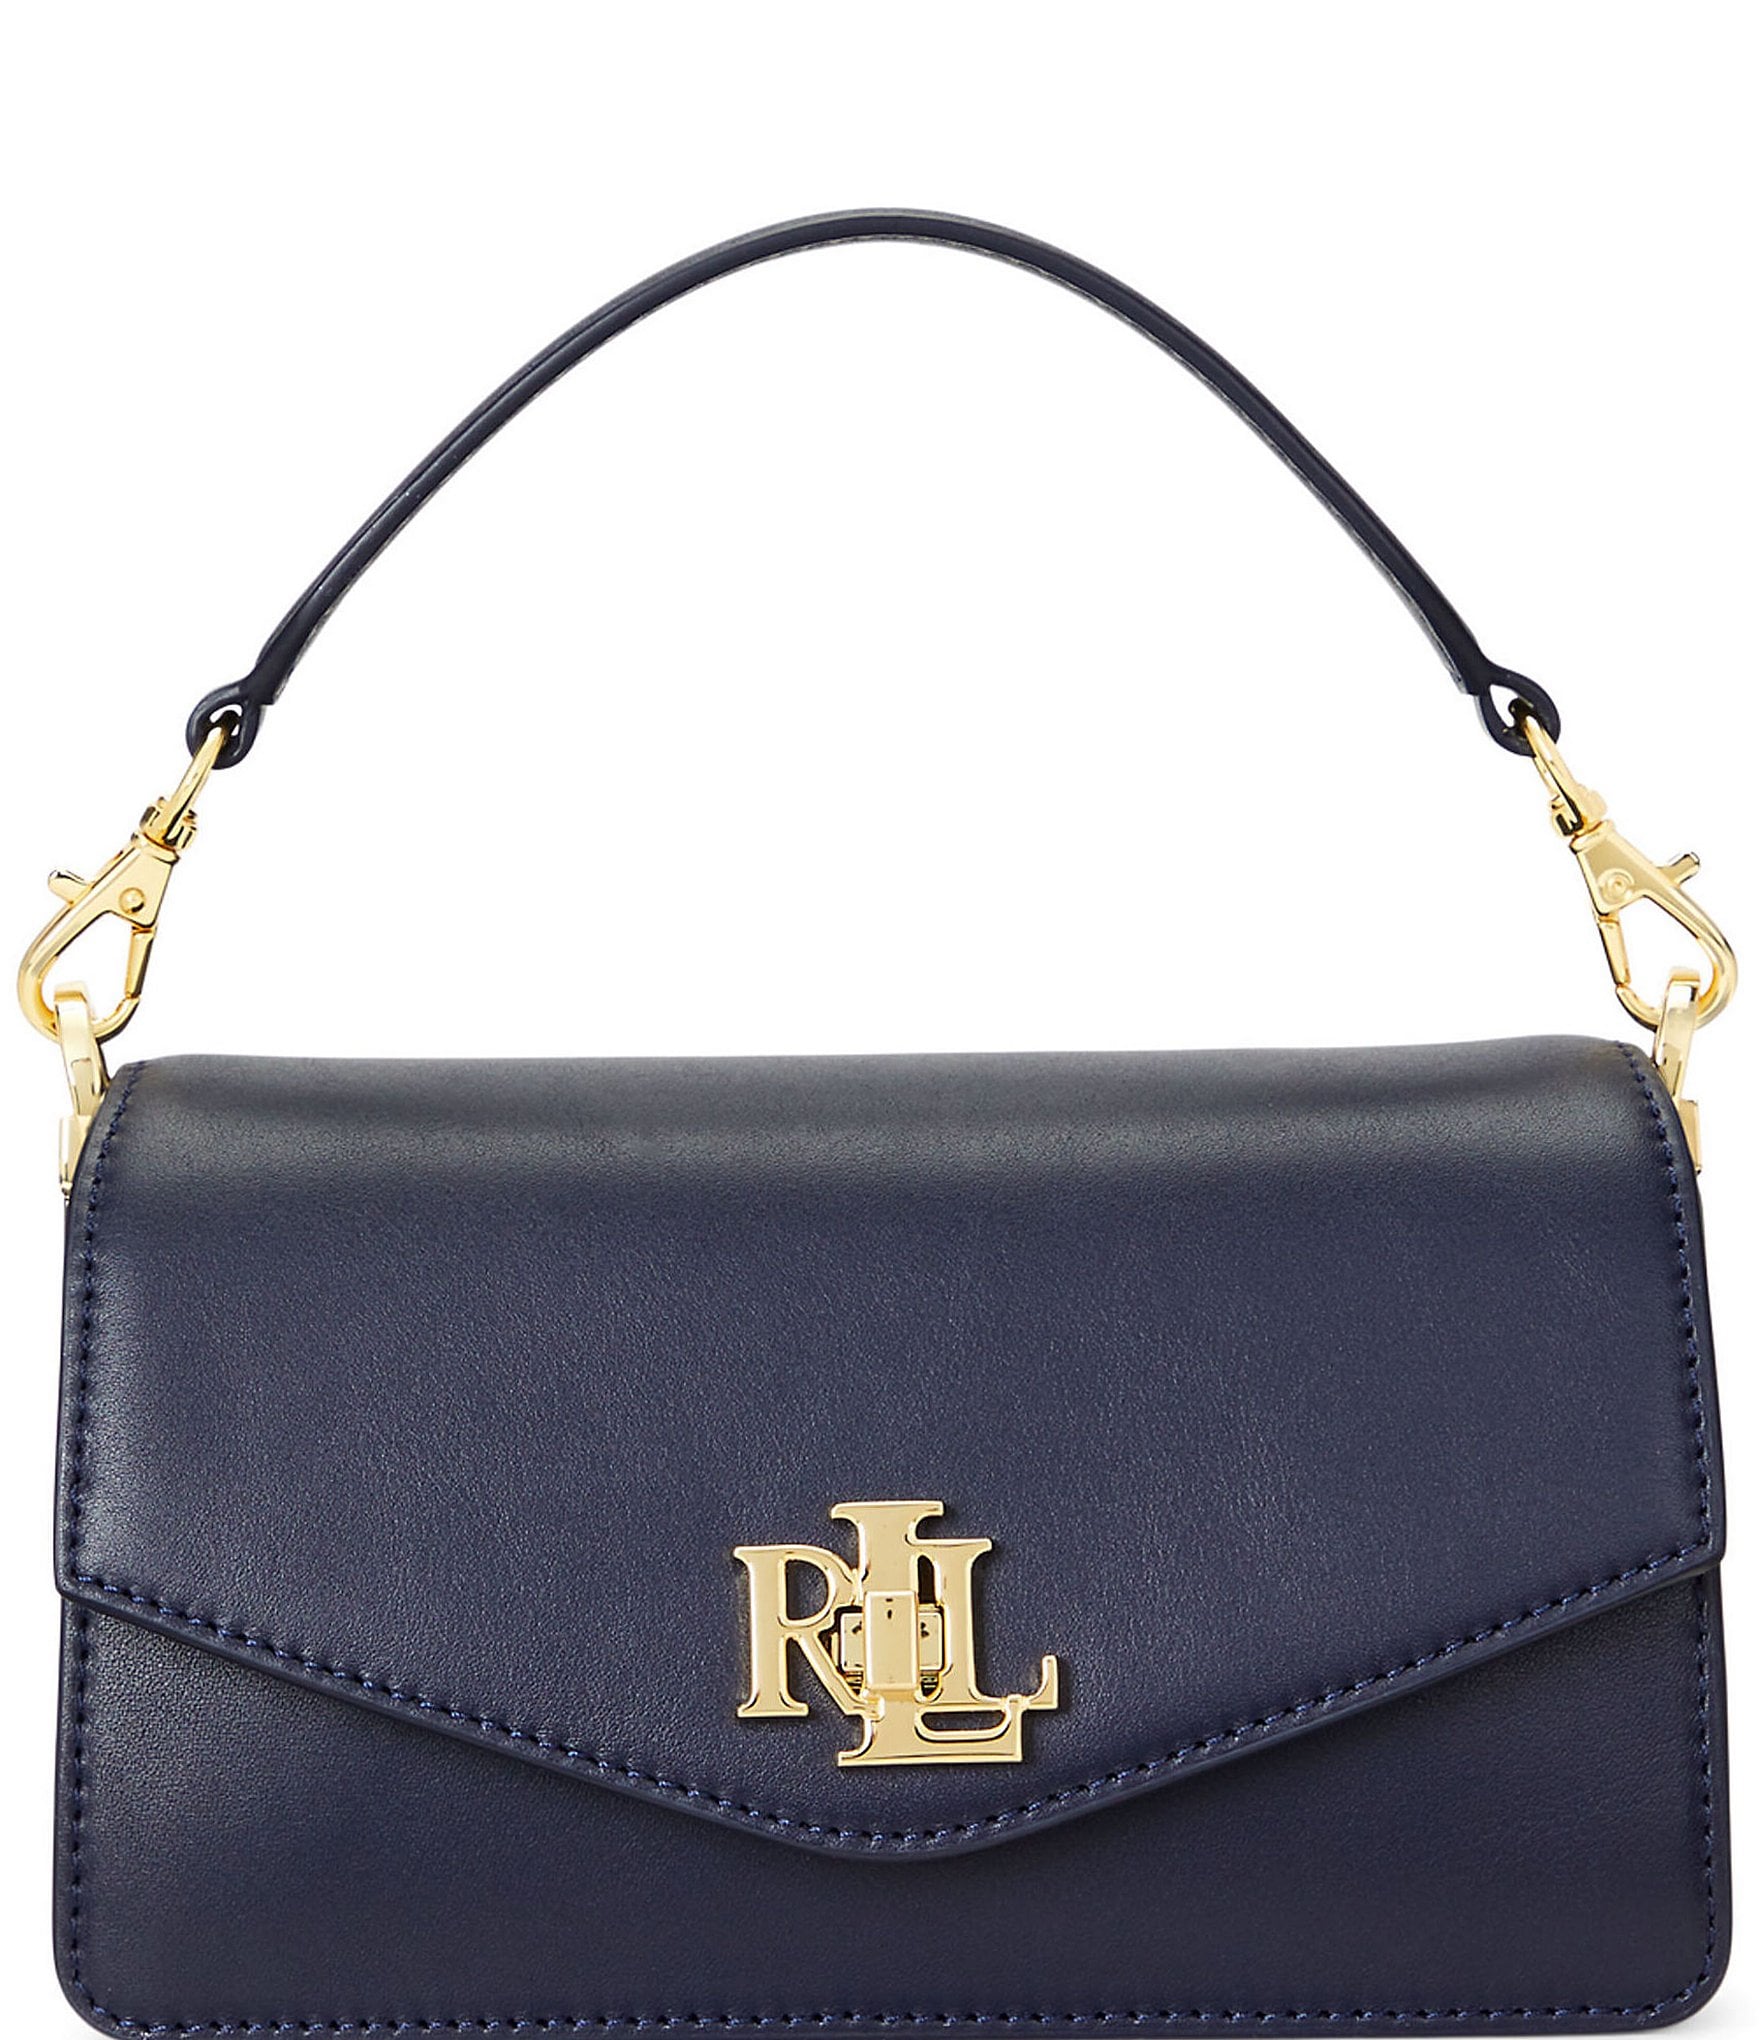 Ralph Lauren Beaded Leather Handbag Strap - Bergdorf Goodman